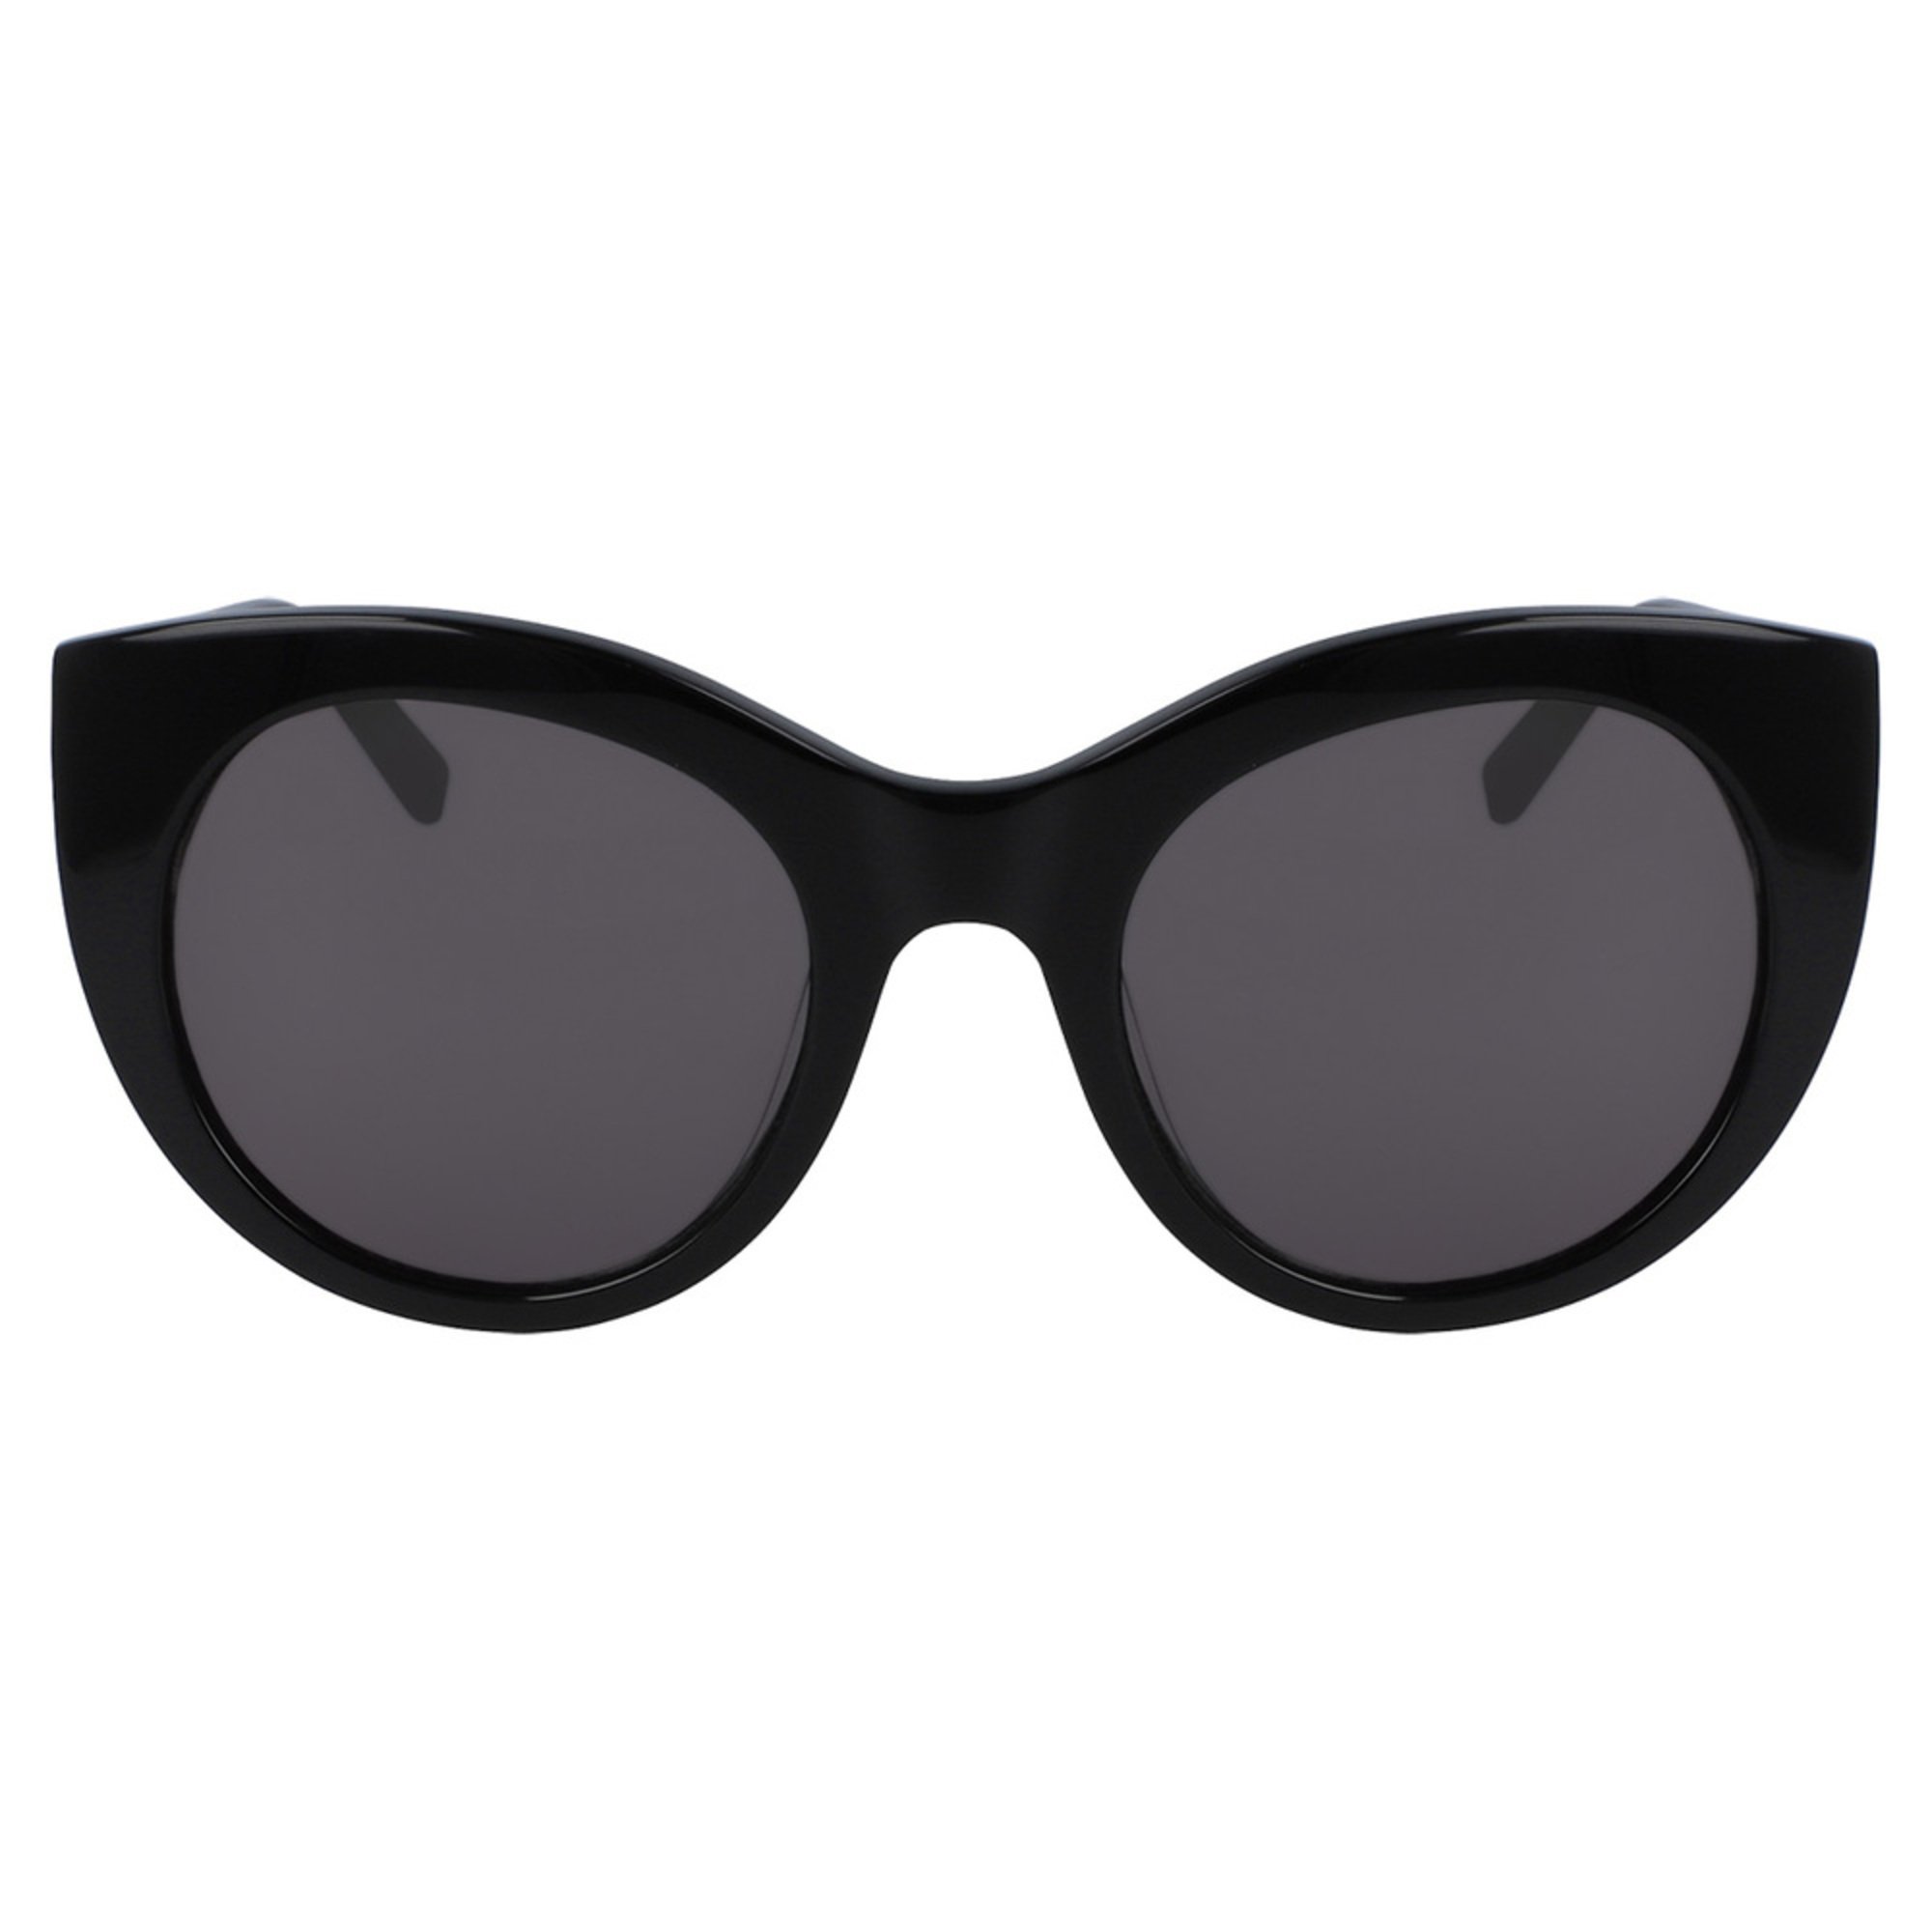 Dkny Women's Round Sunglasses | Women's Sunglasses | Accessories - Shop ...